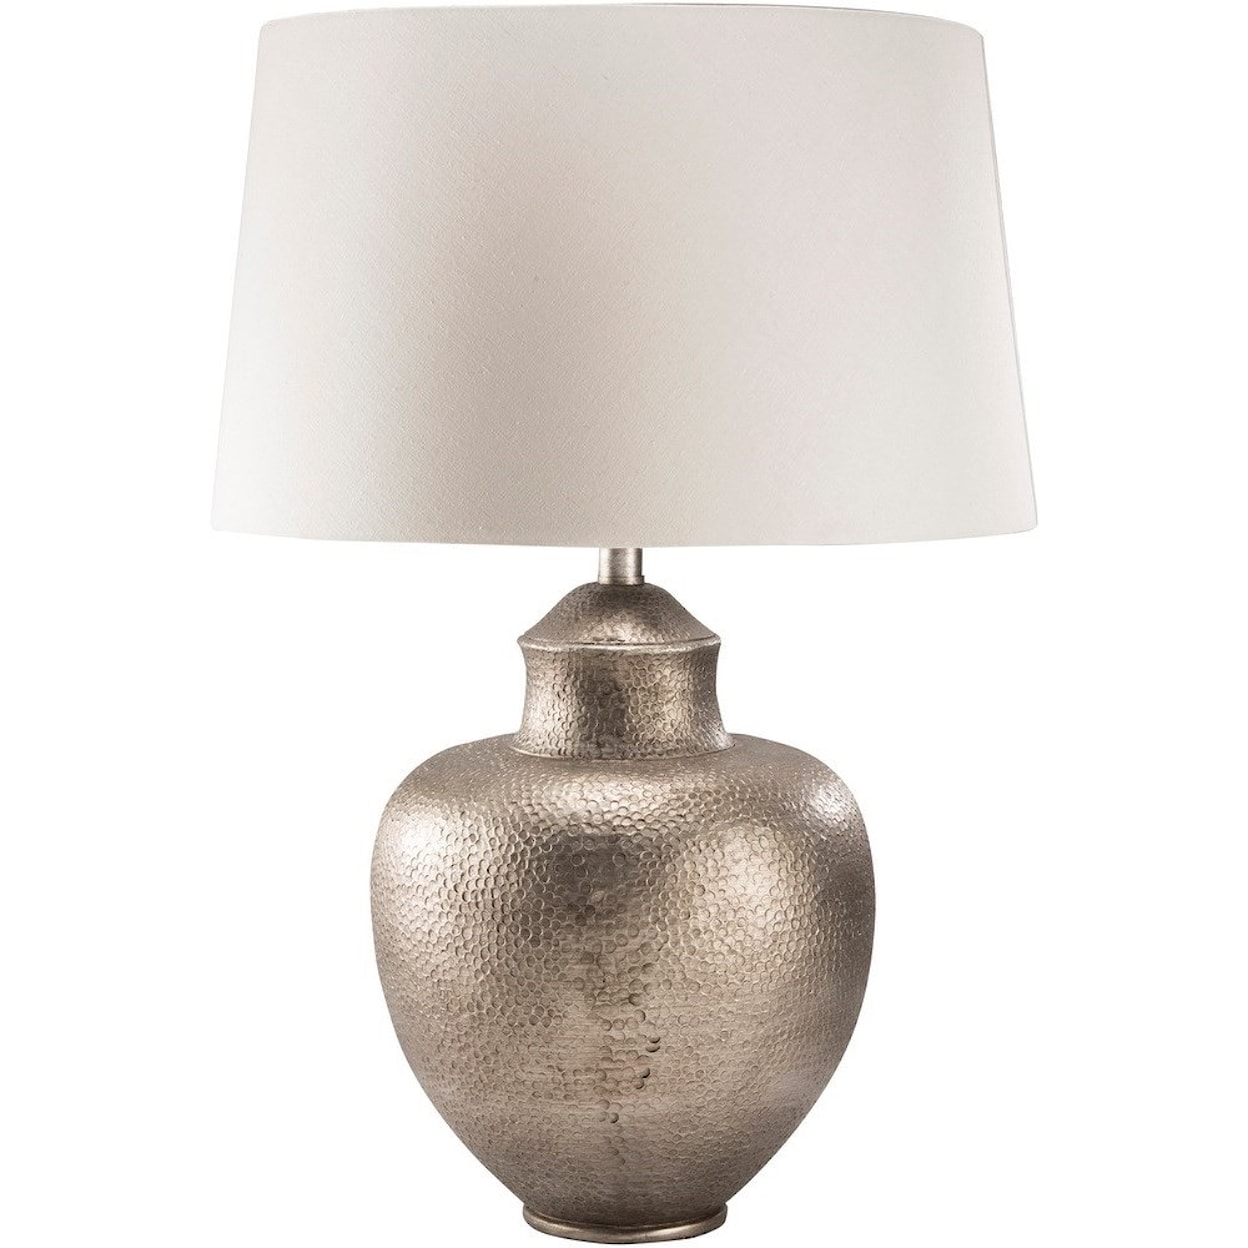 Carolina Rugs Cooper Antiqued Silvertone Global Table Lamp